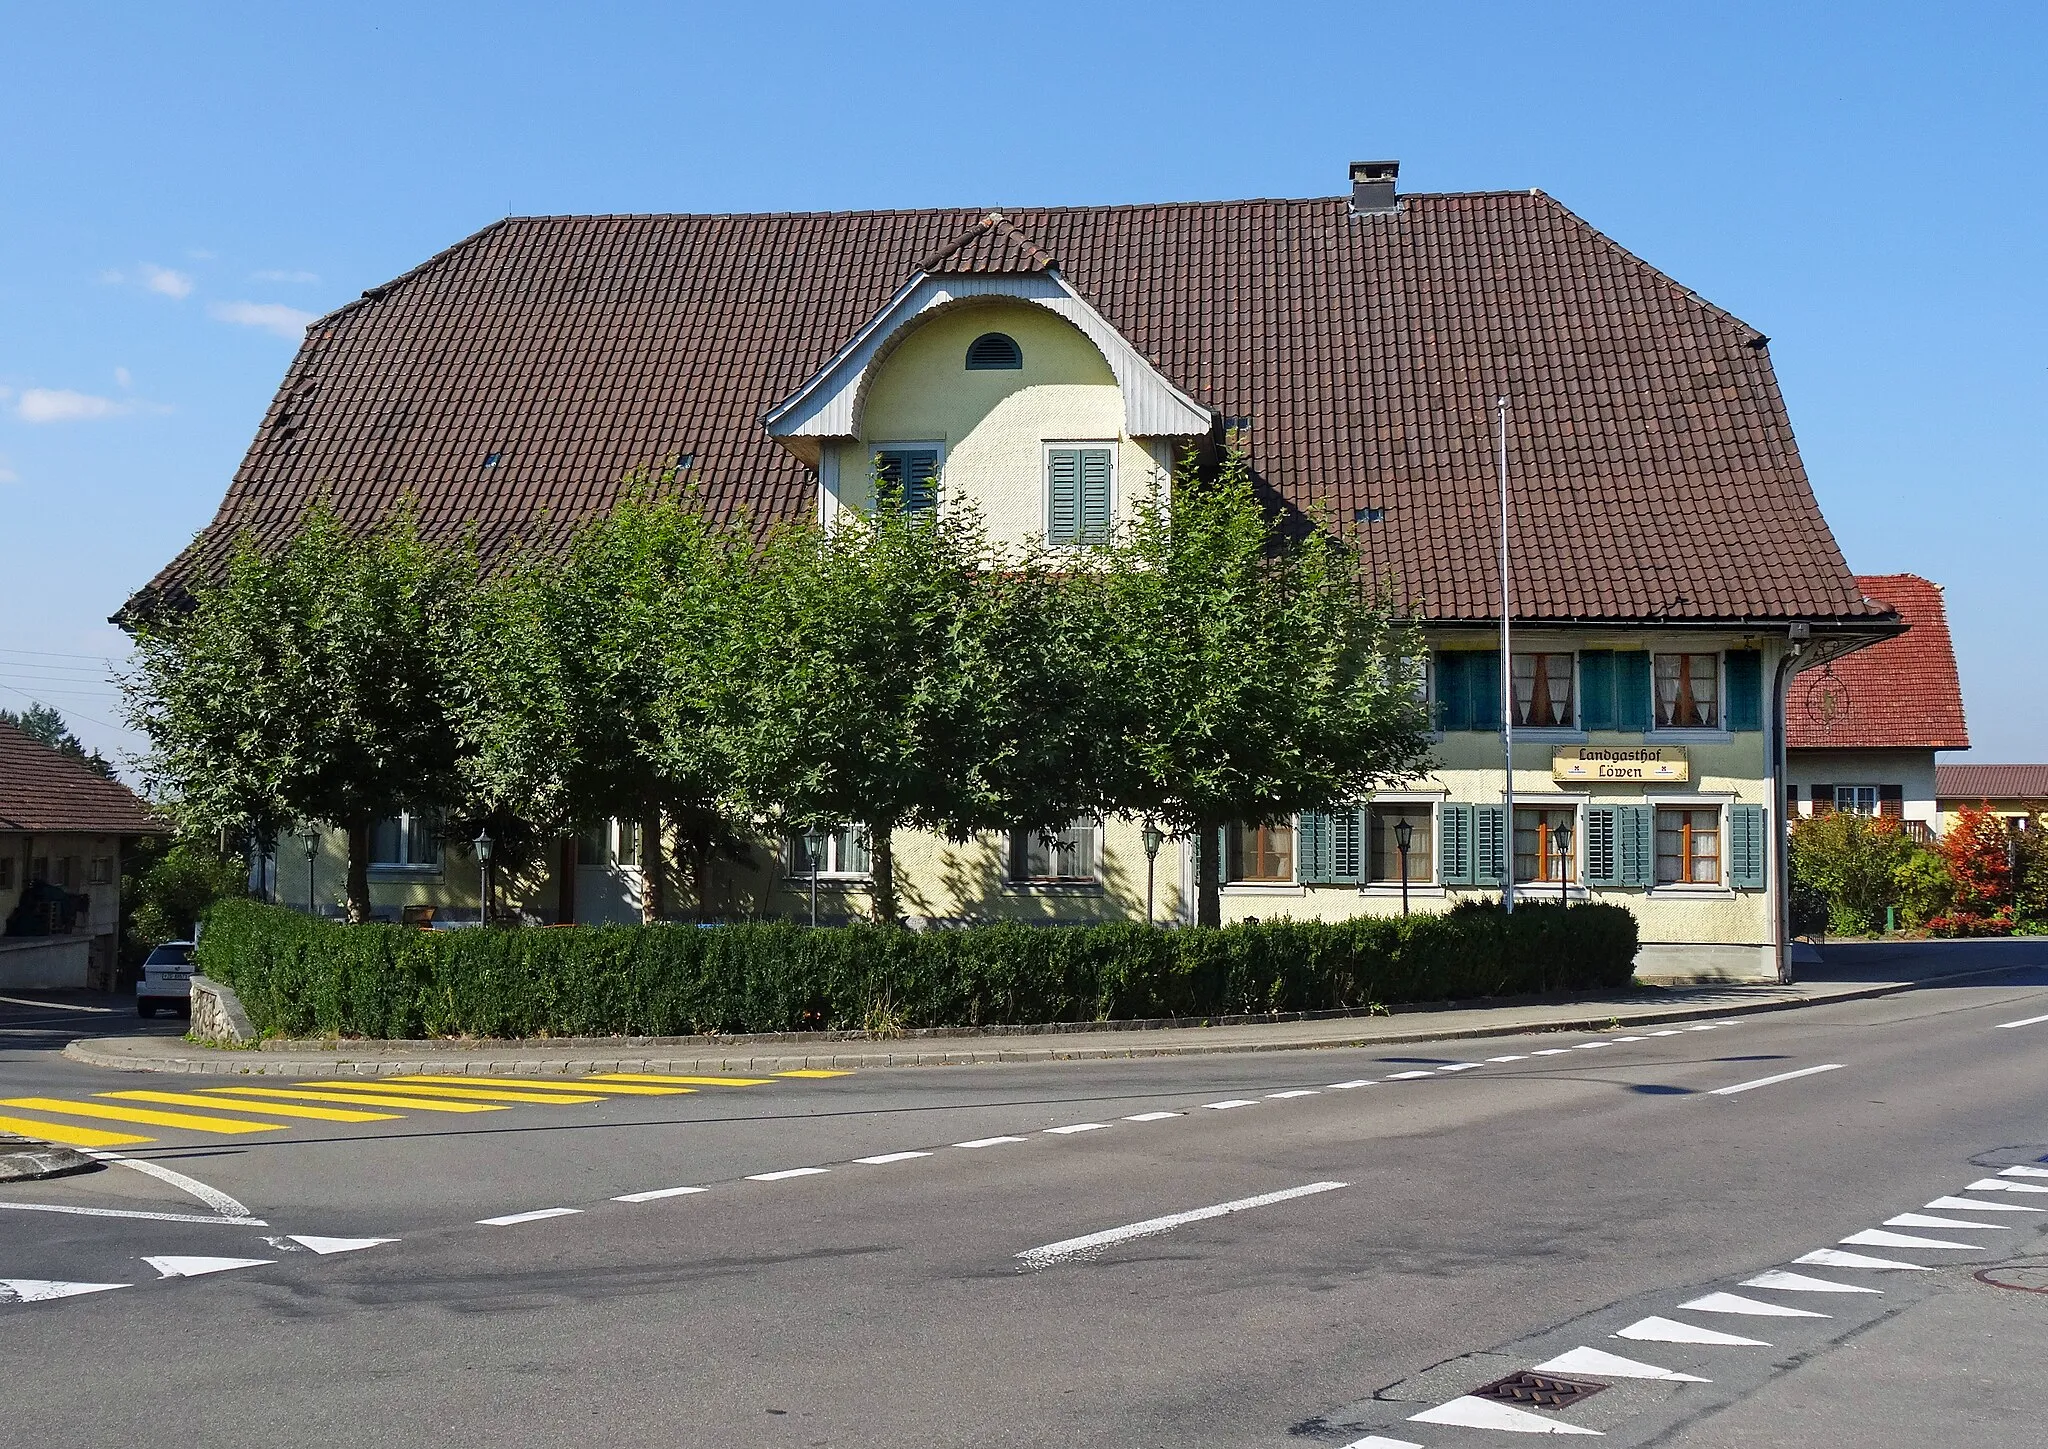 Photo showing: "Löwen" Inn in Schwarzenbach LU, Switzerland